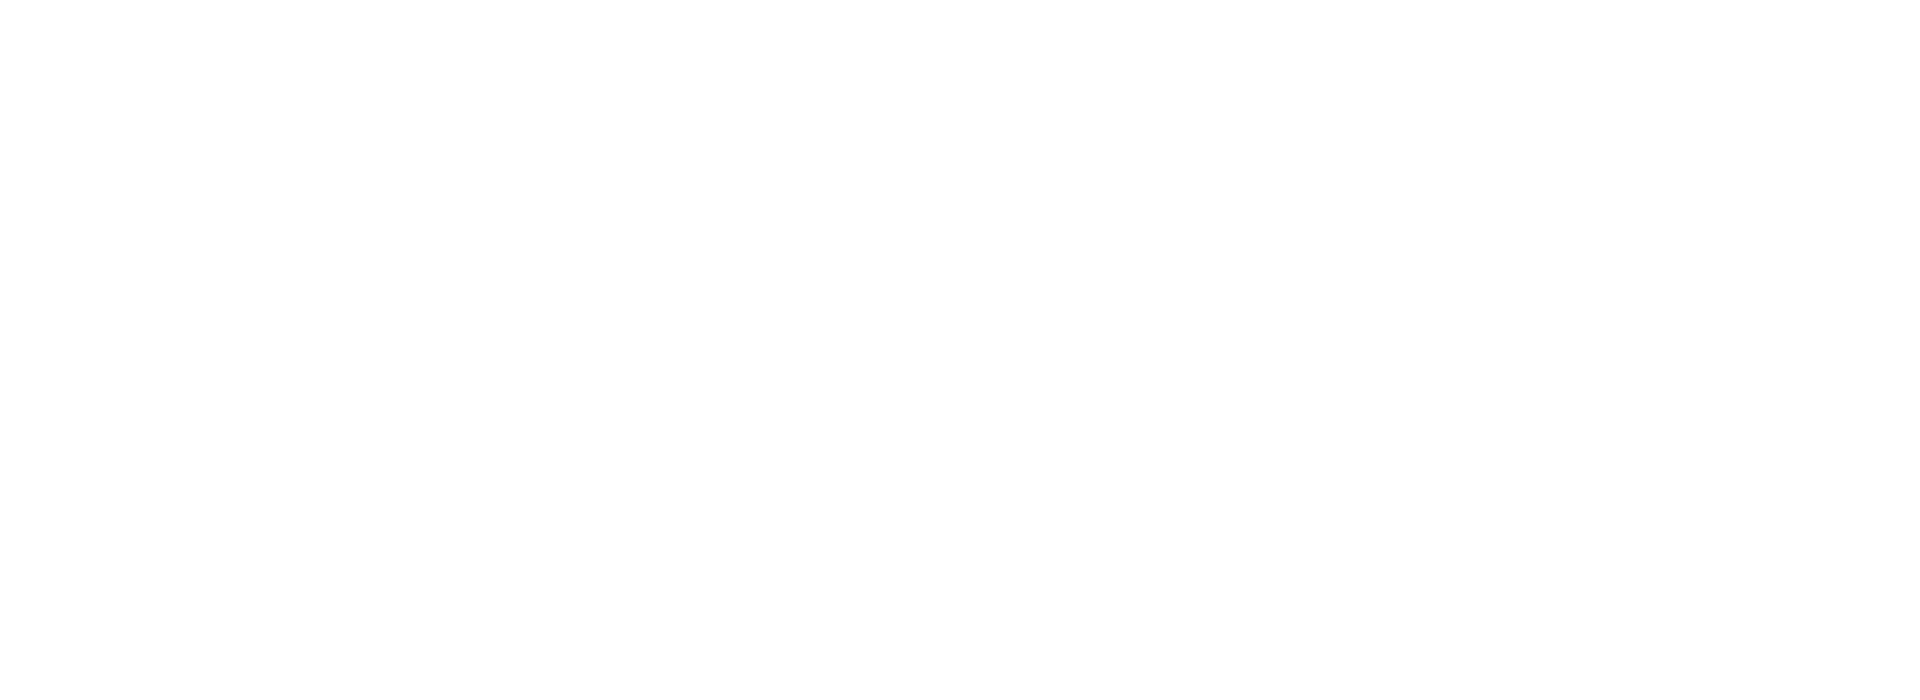 Checkbox Logo - Checkbox Code Automation Platform for Legal & Compliance